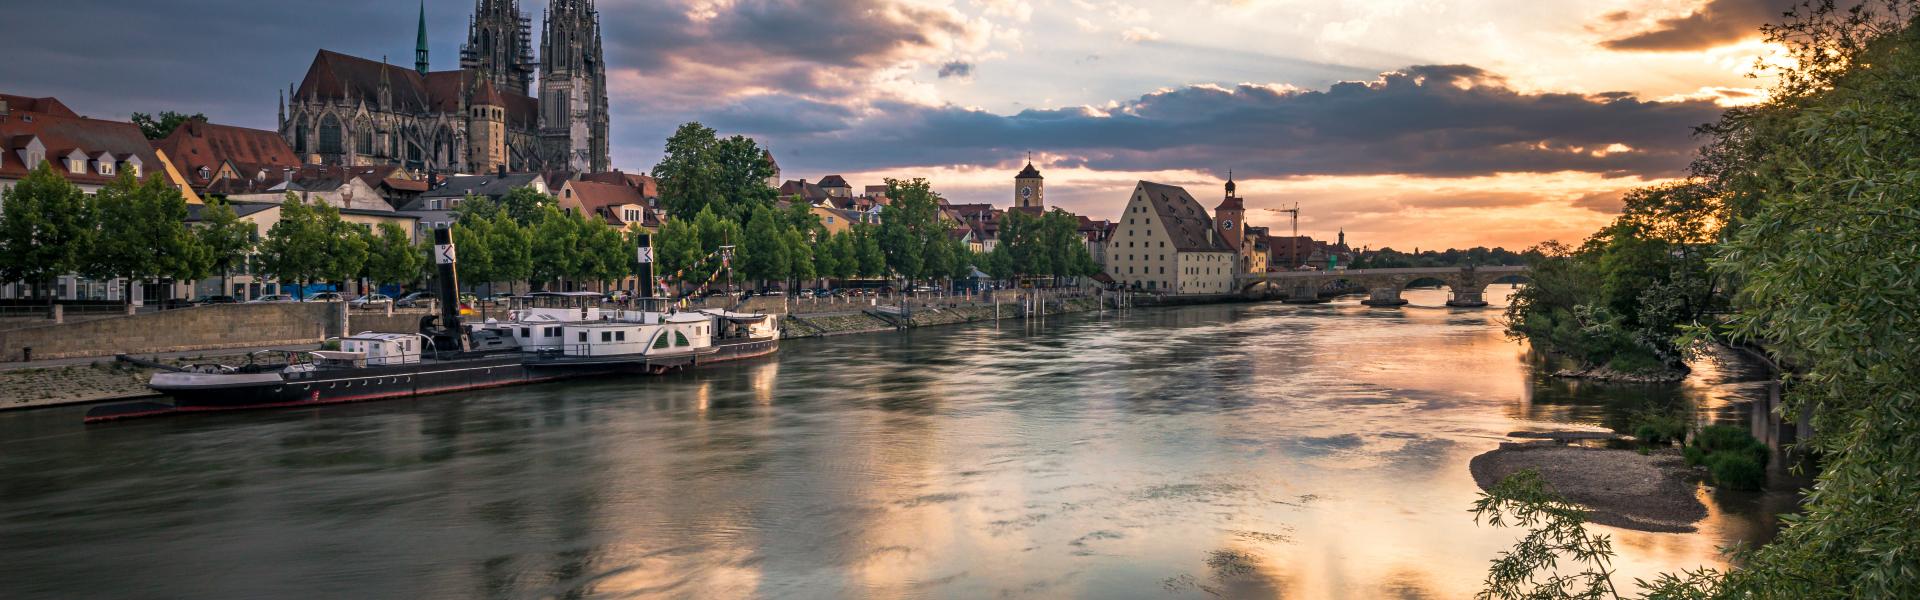 Regensburg Scenic View